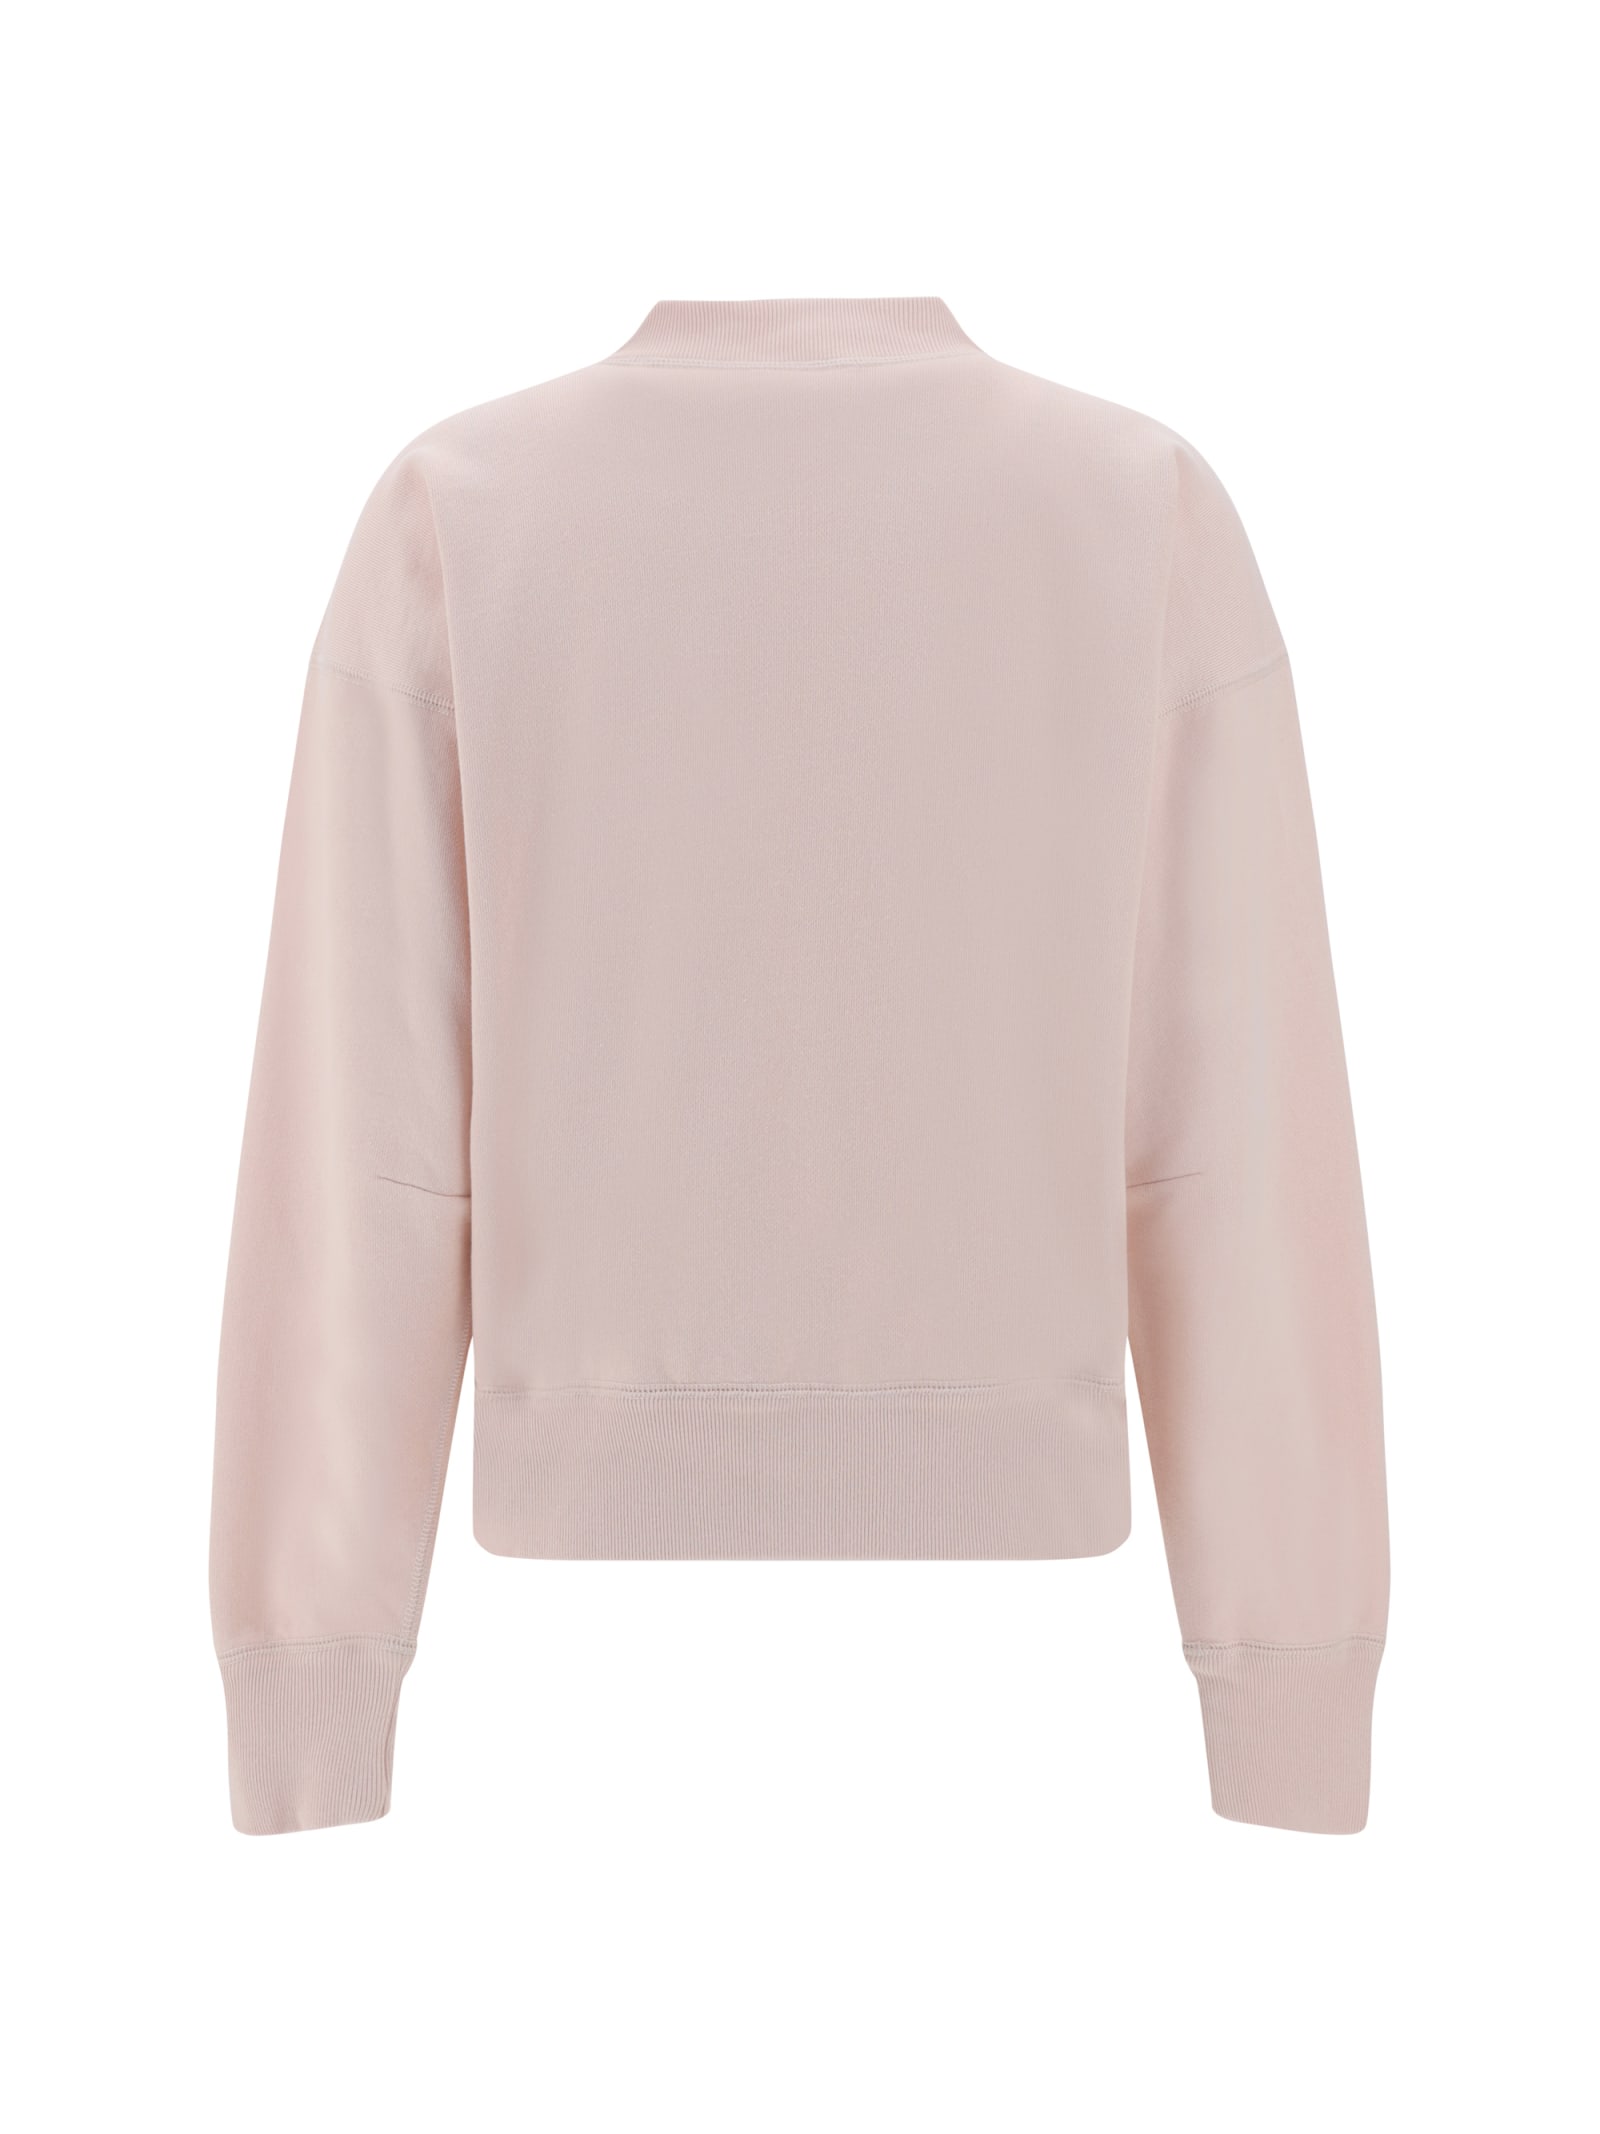 Shop Marant Etoile Moby Sweatshirt In Pink